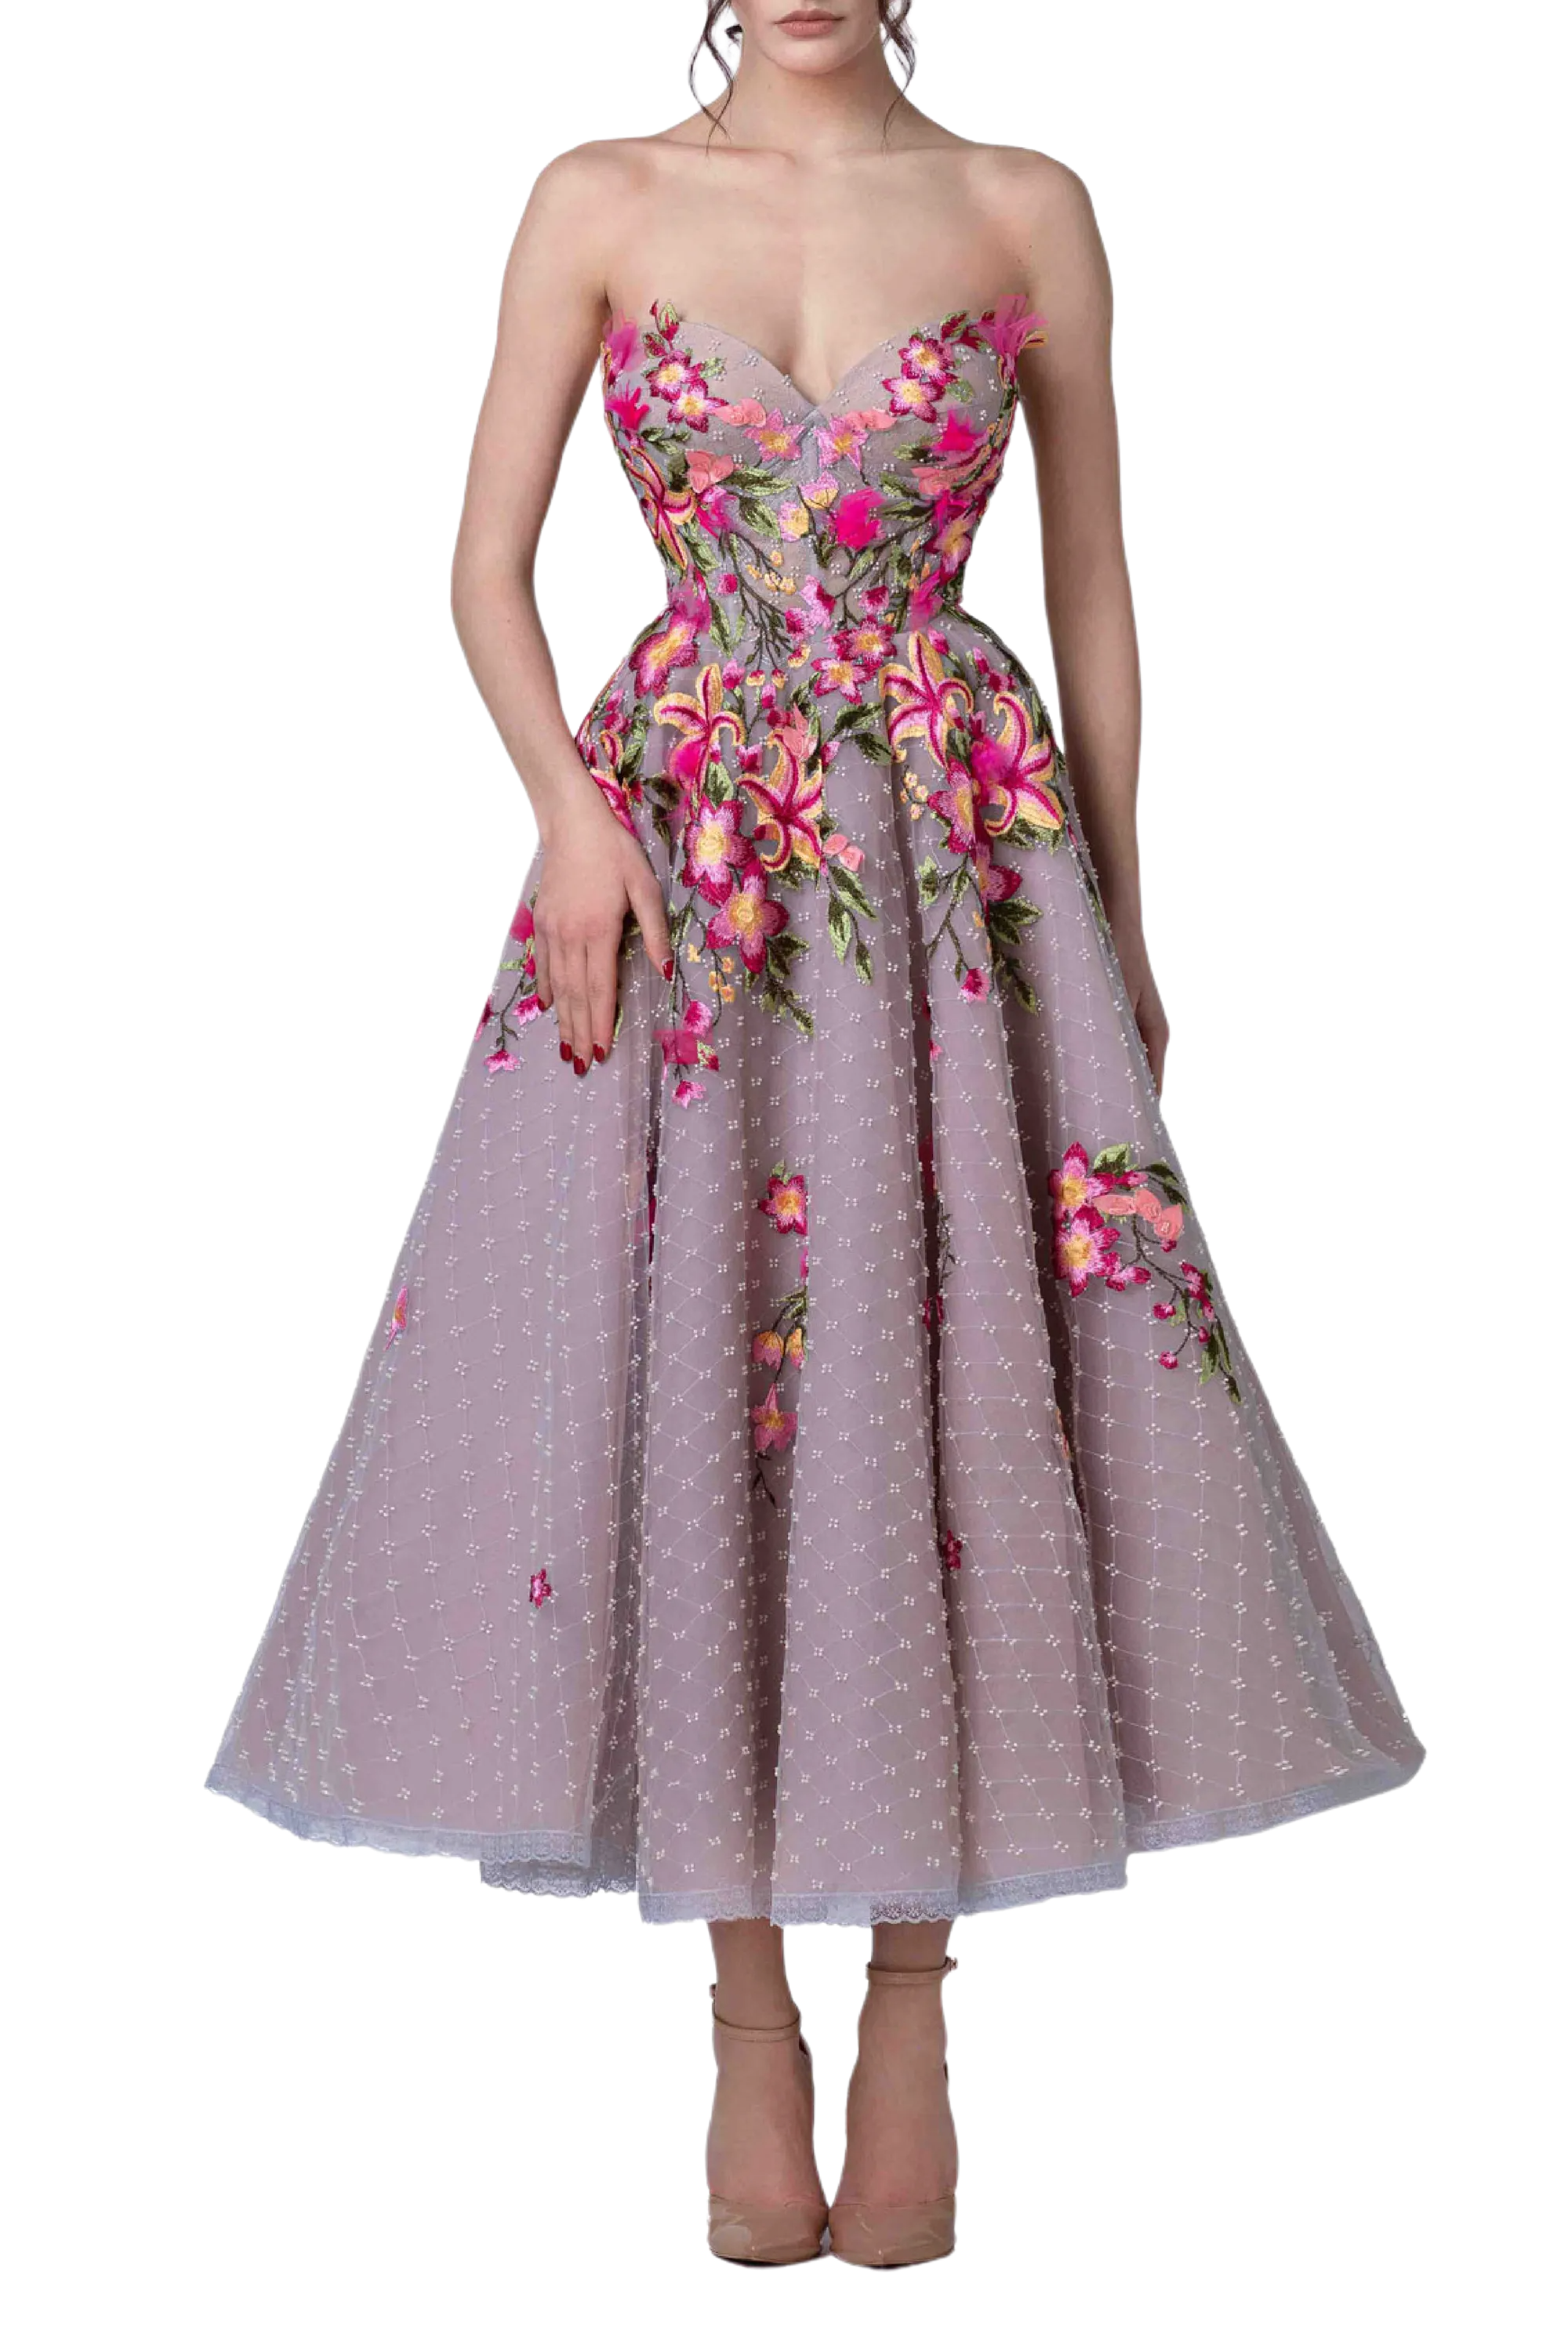 Tea Length Floral Dress